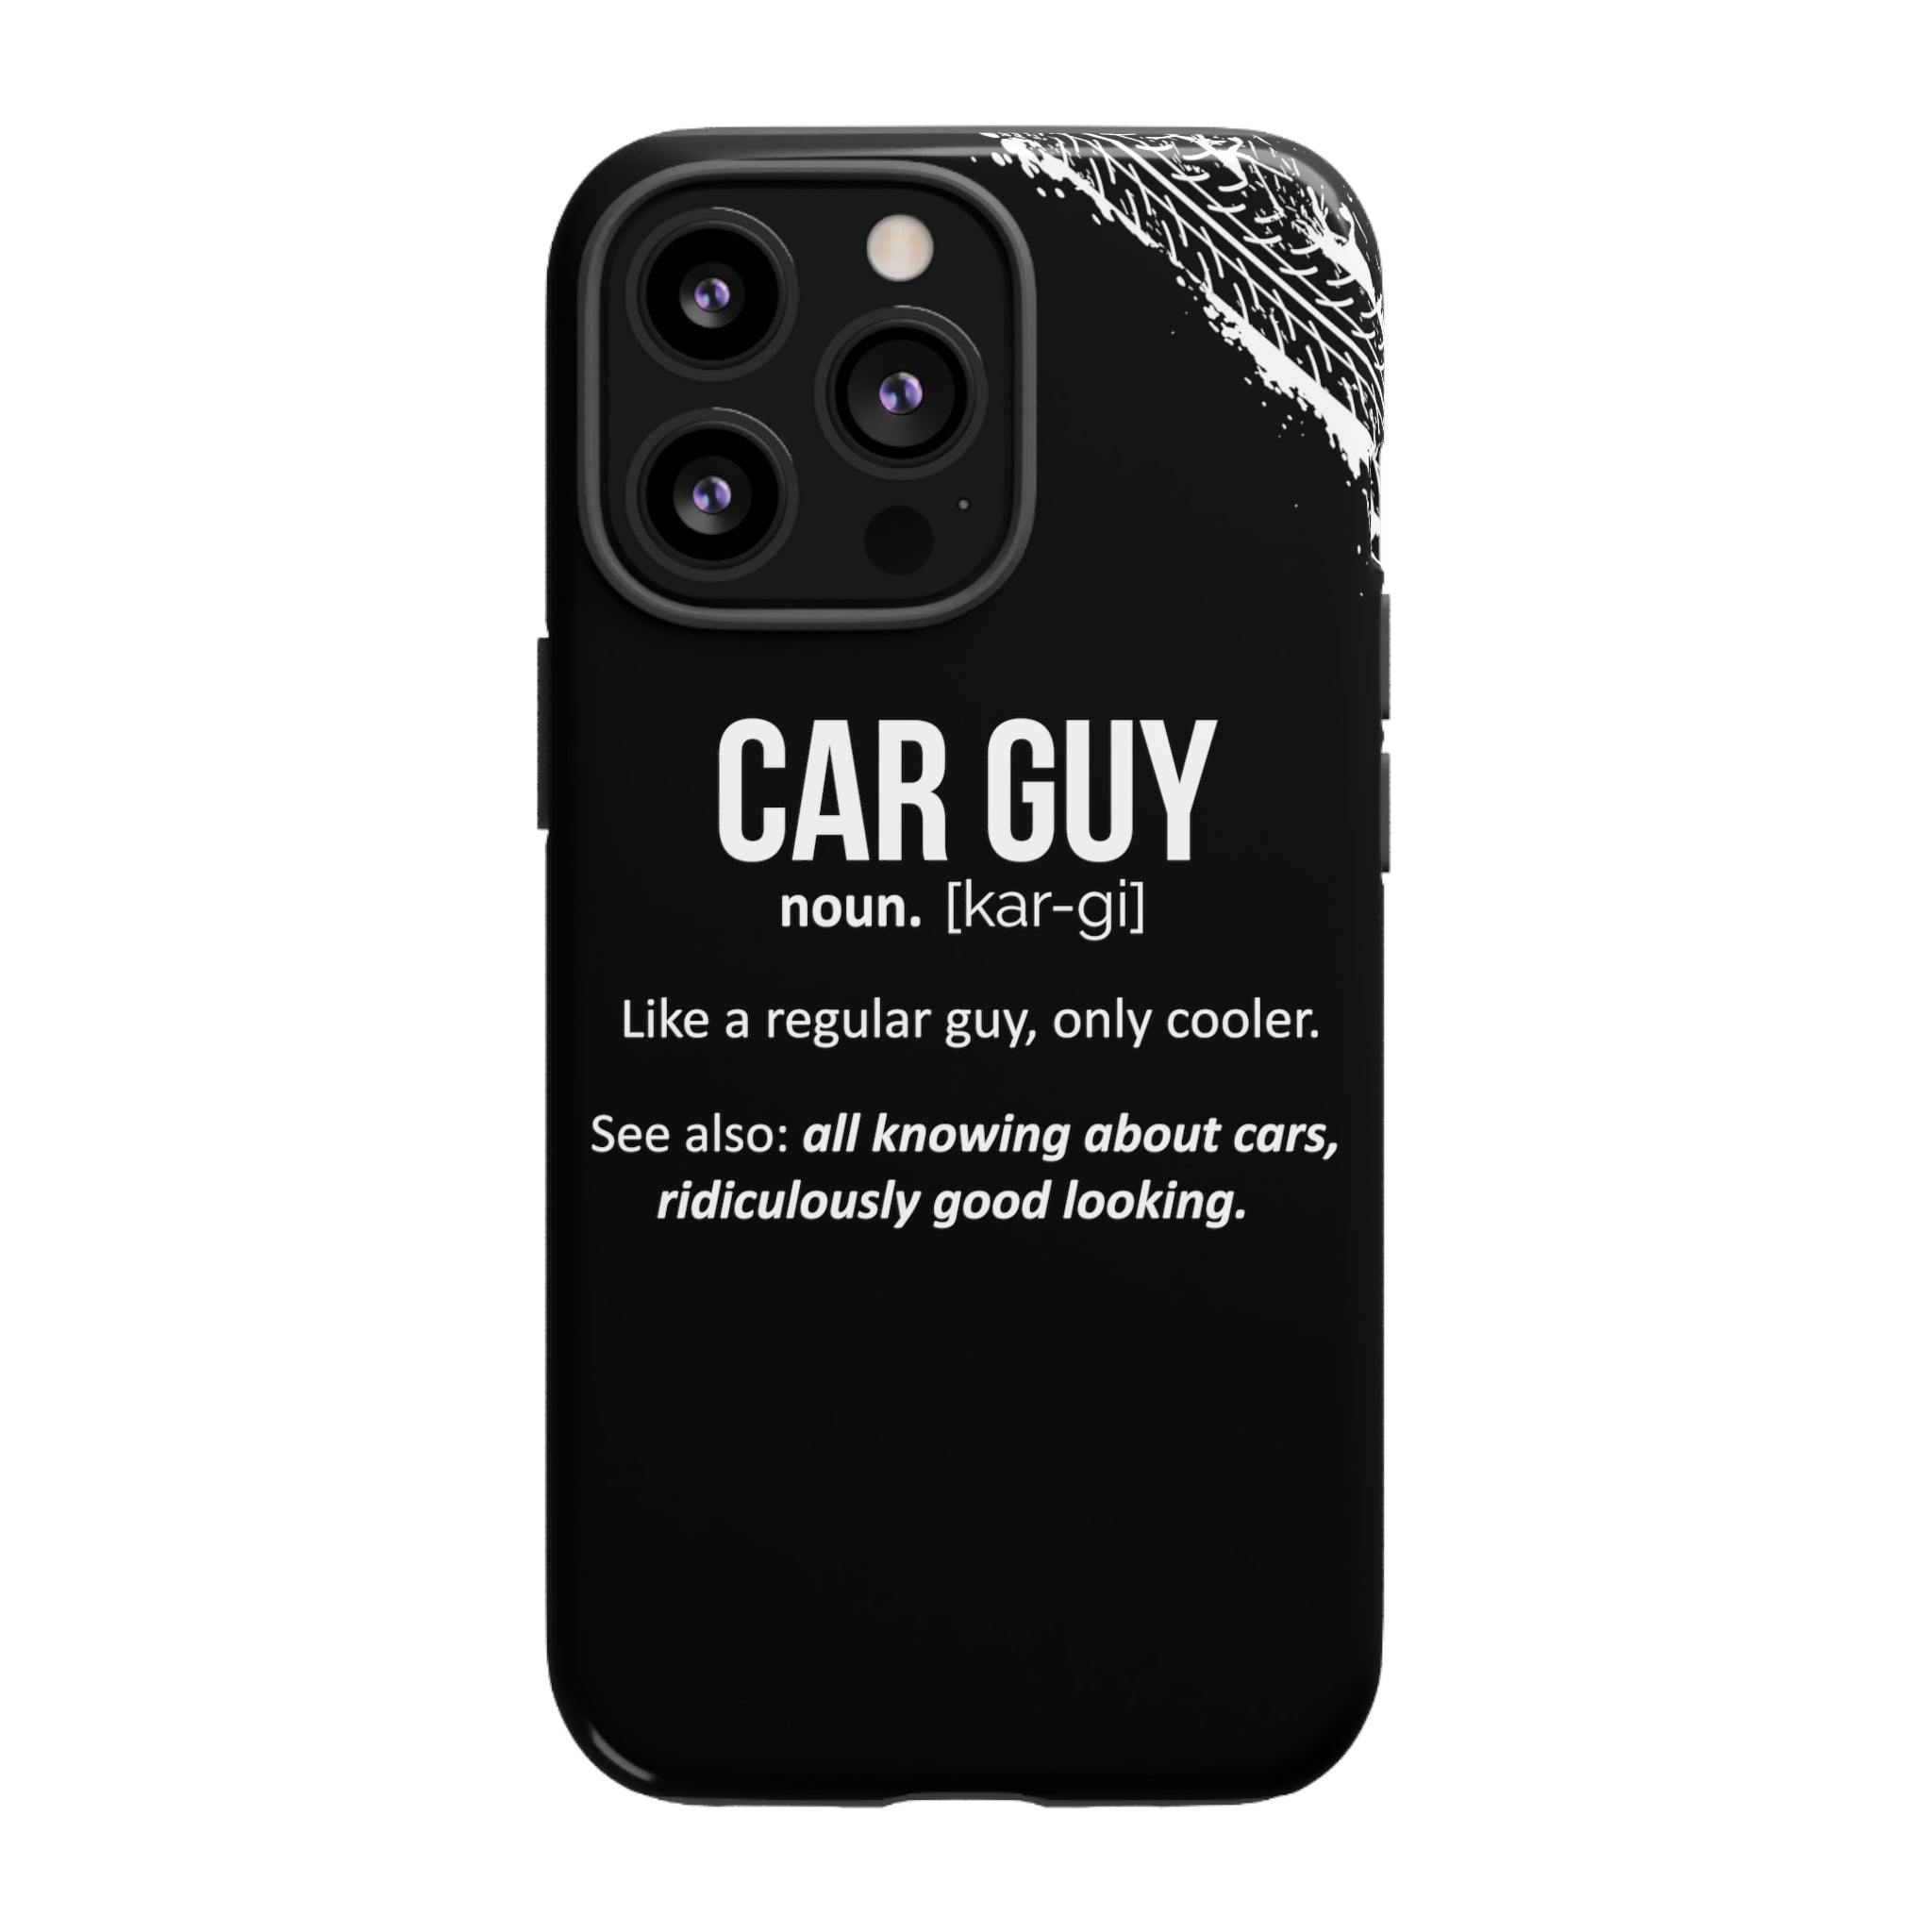 Car Guy - Phone Case